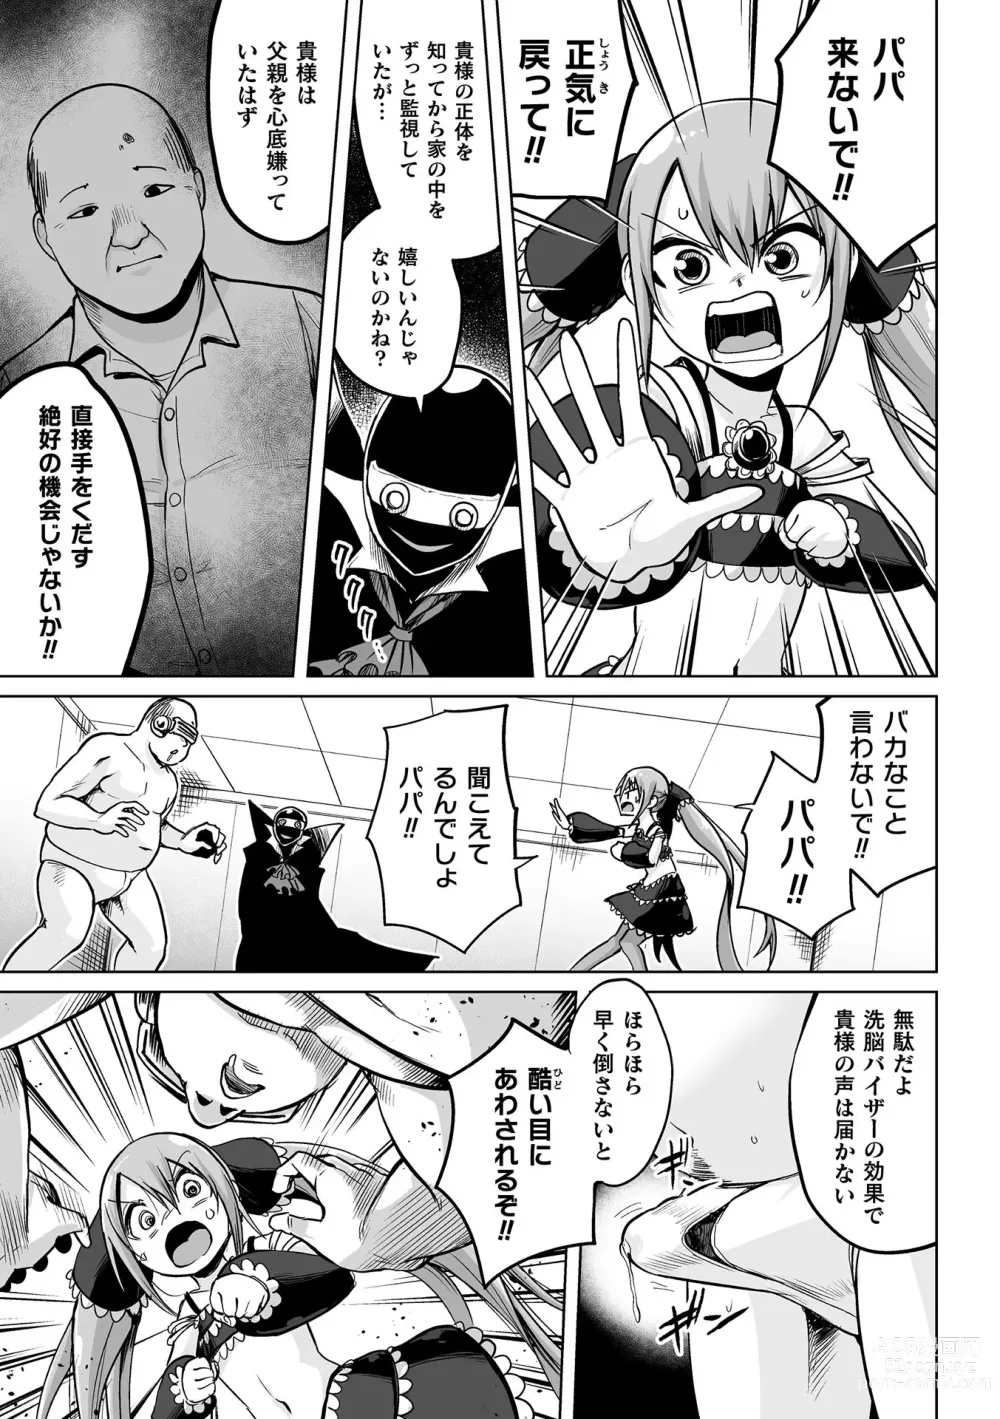 Page 155 of manga Kukkoro Heroines Vol. 34